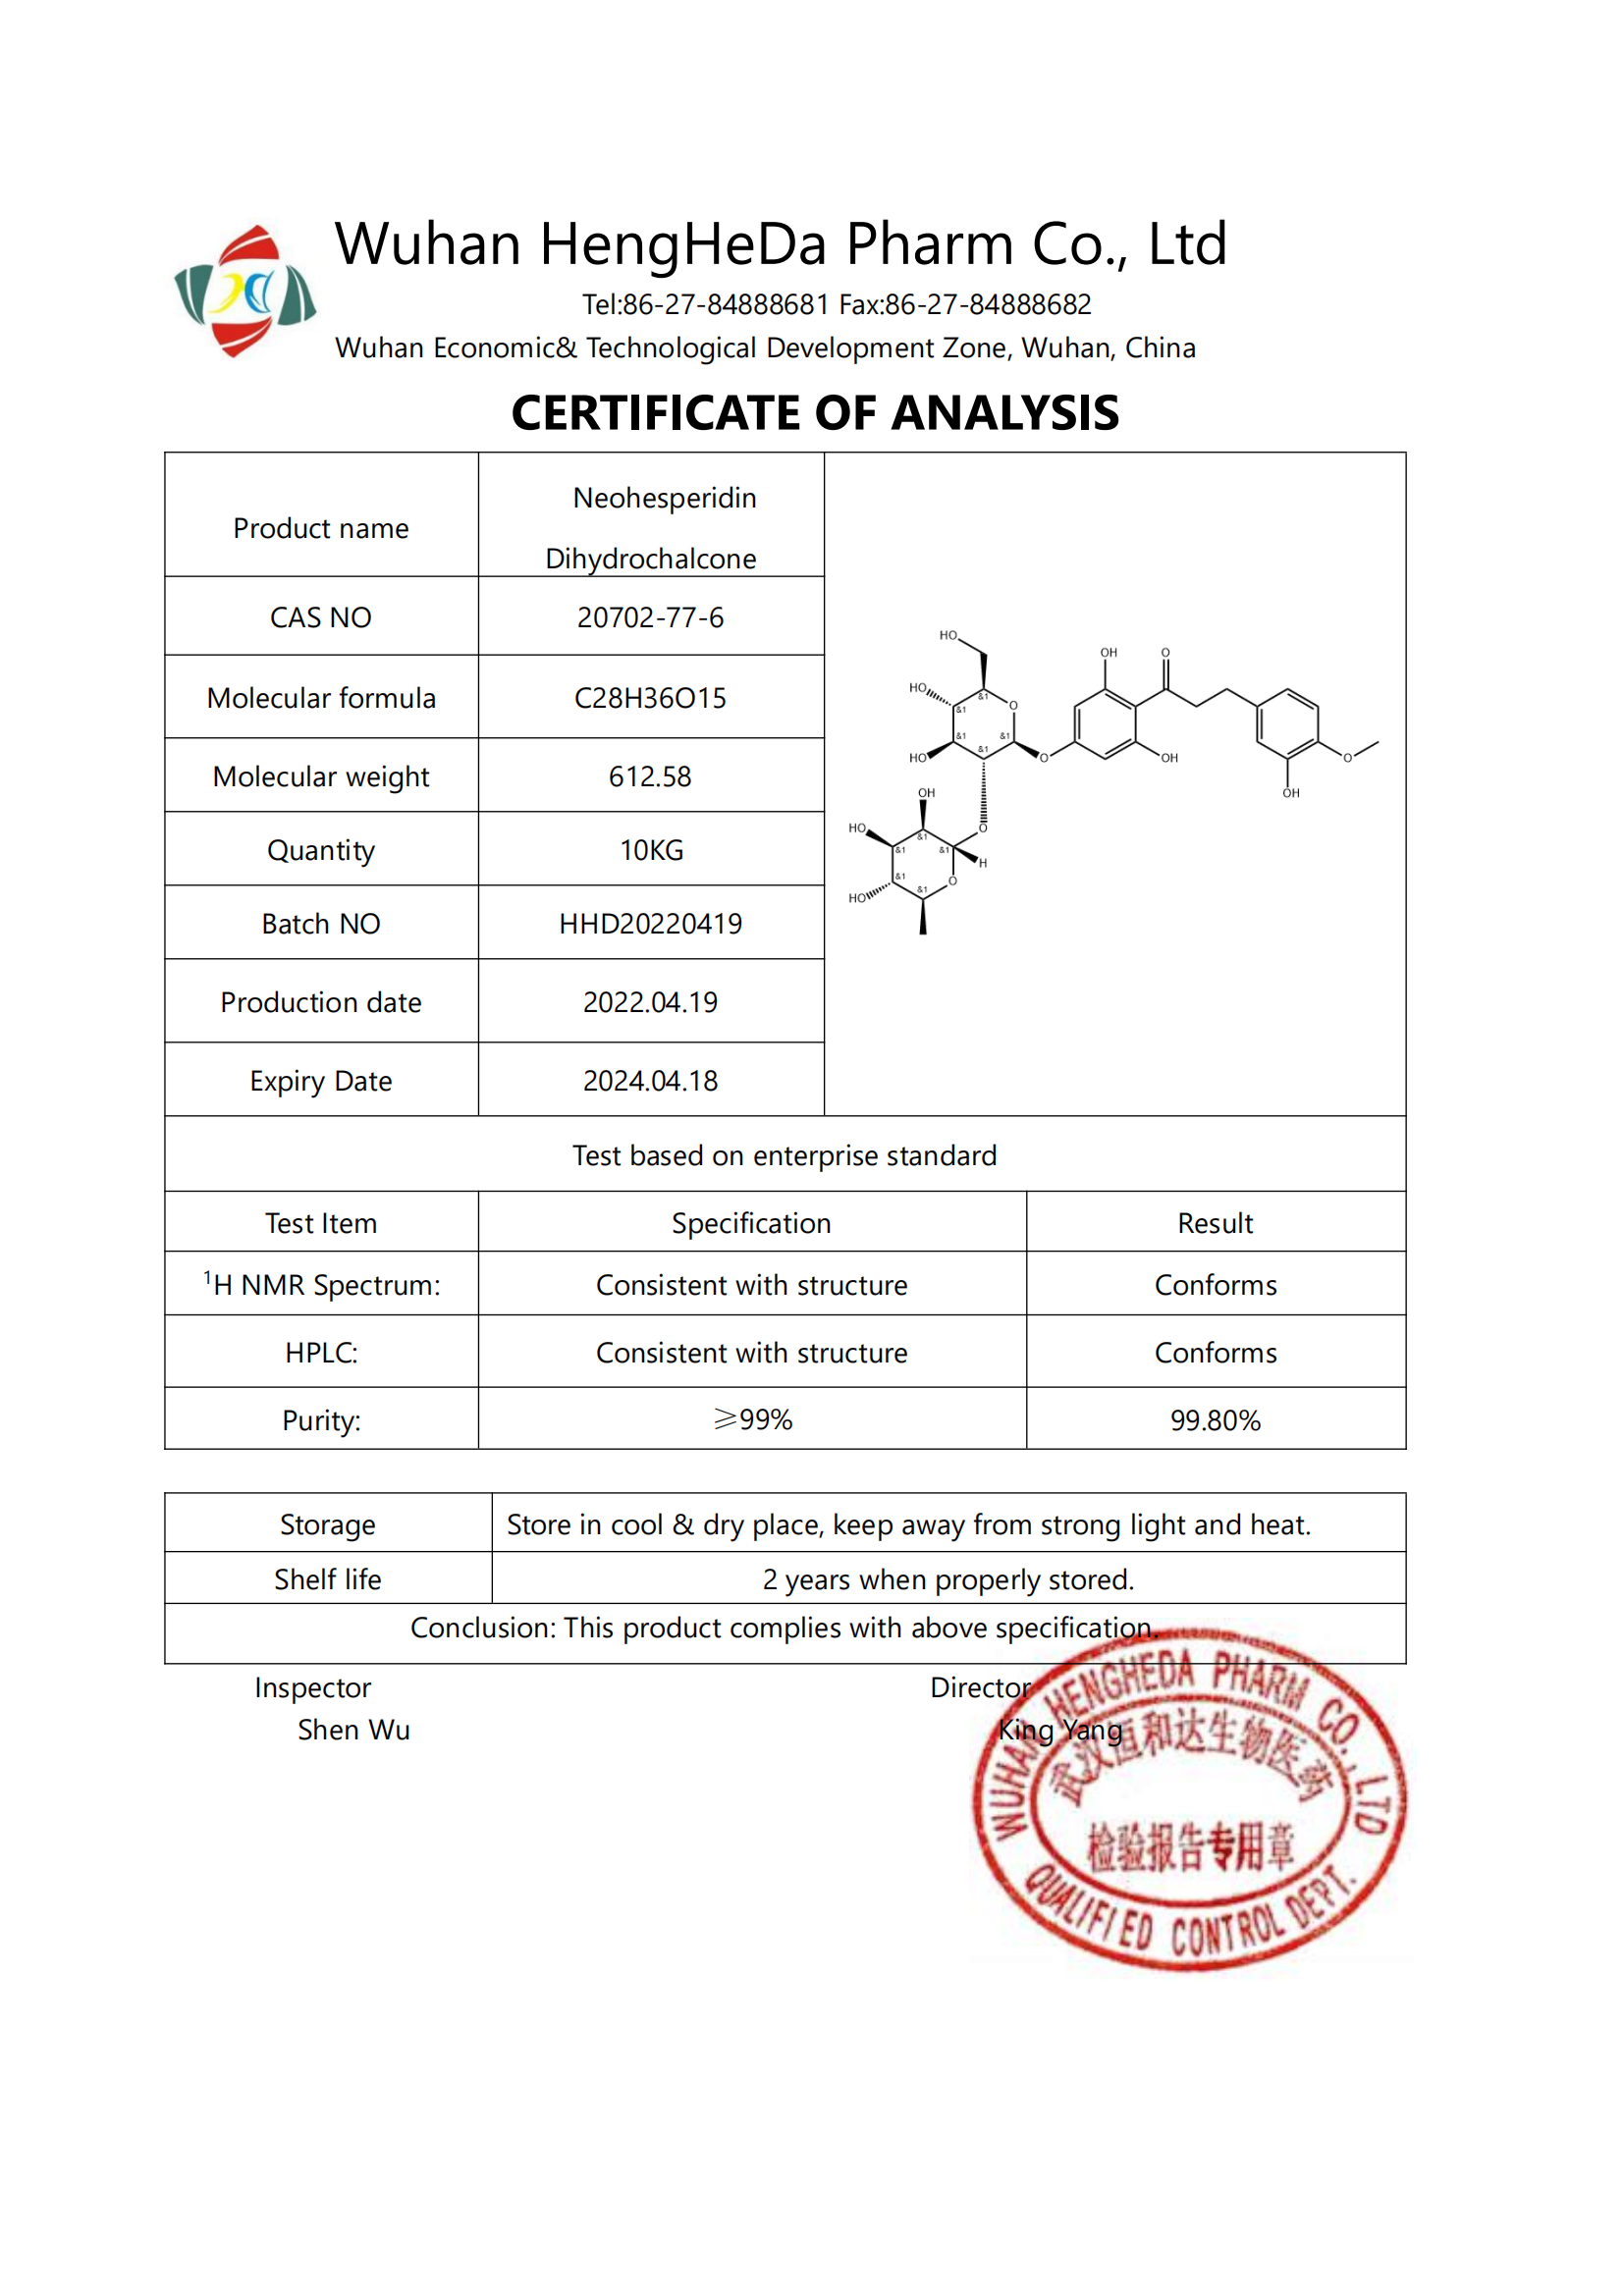 Acquista 98% Neosperidina diidrocalcone/NHDC CAS 20702-77-6,98% Neosperidina diidrocalcone/NHDC CAS 20702-77-6 prezzi,98% Neosperidina diidrocalcone/NHDC CAS 20702-77-6 marche,98% Neosperidina diidrocalcone/NHDC CAS 20702-77-6 Produttori,98% Neosperidina diidrocalcone/NHDC CAS 20702-77-6 Citazioni,98% Neosperidina diidrocalcone/NHDC CAS 20702-77-6  l'azienda,